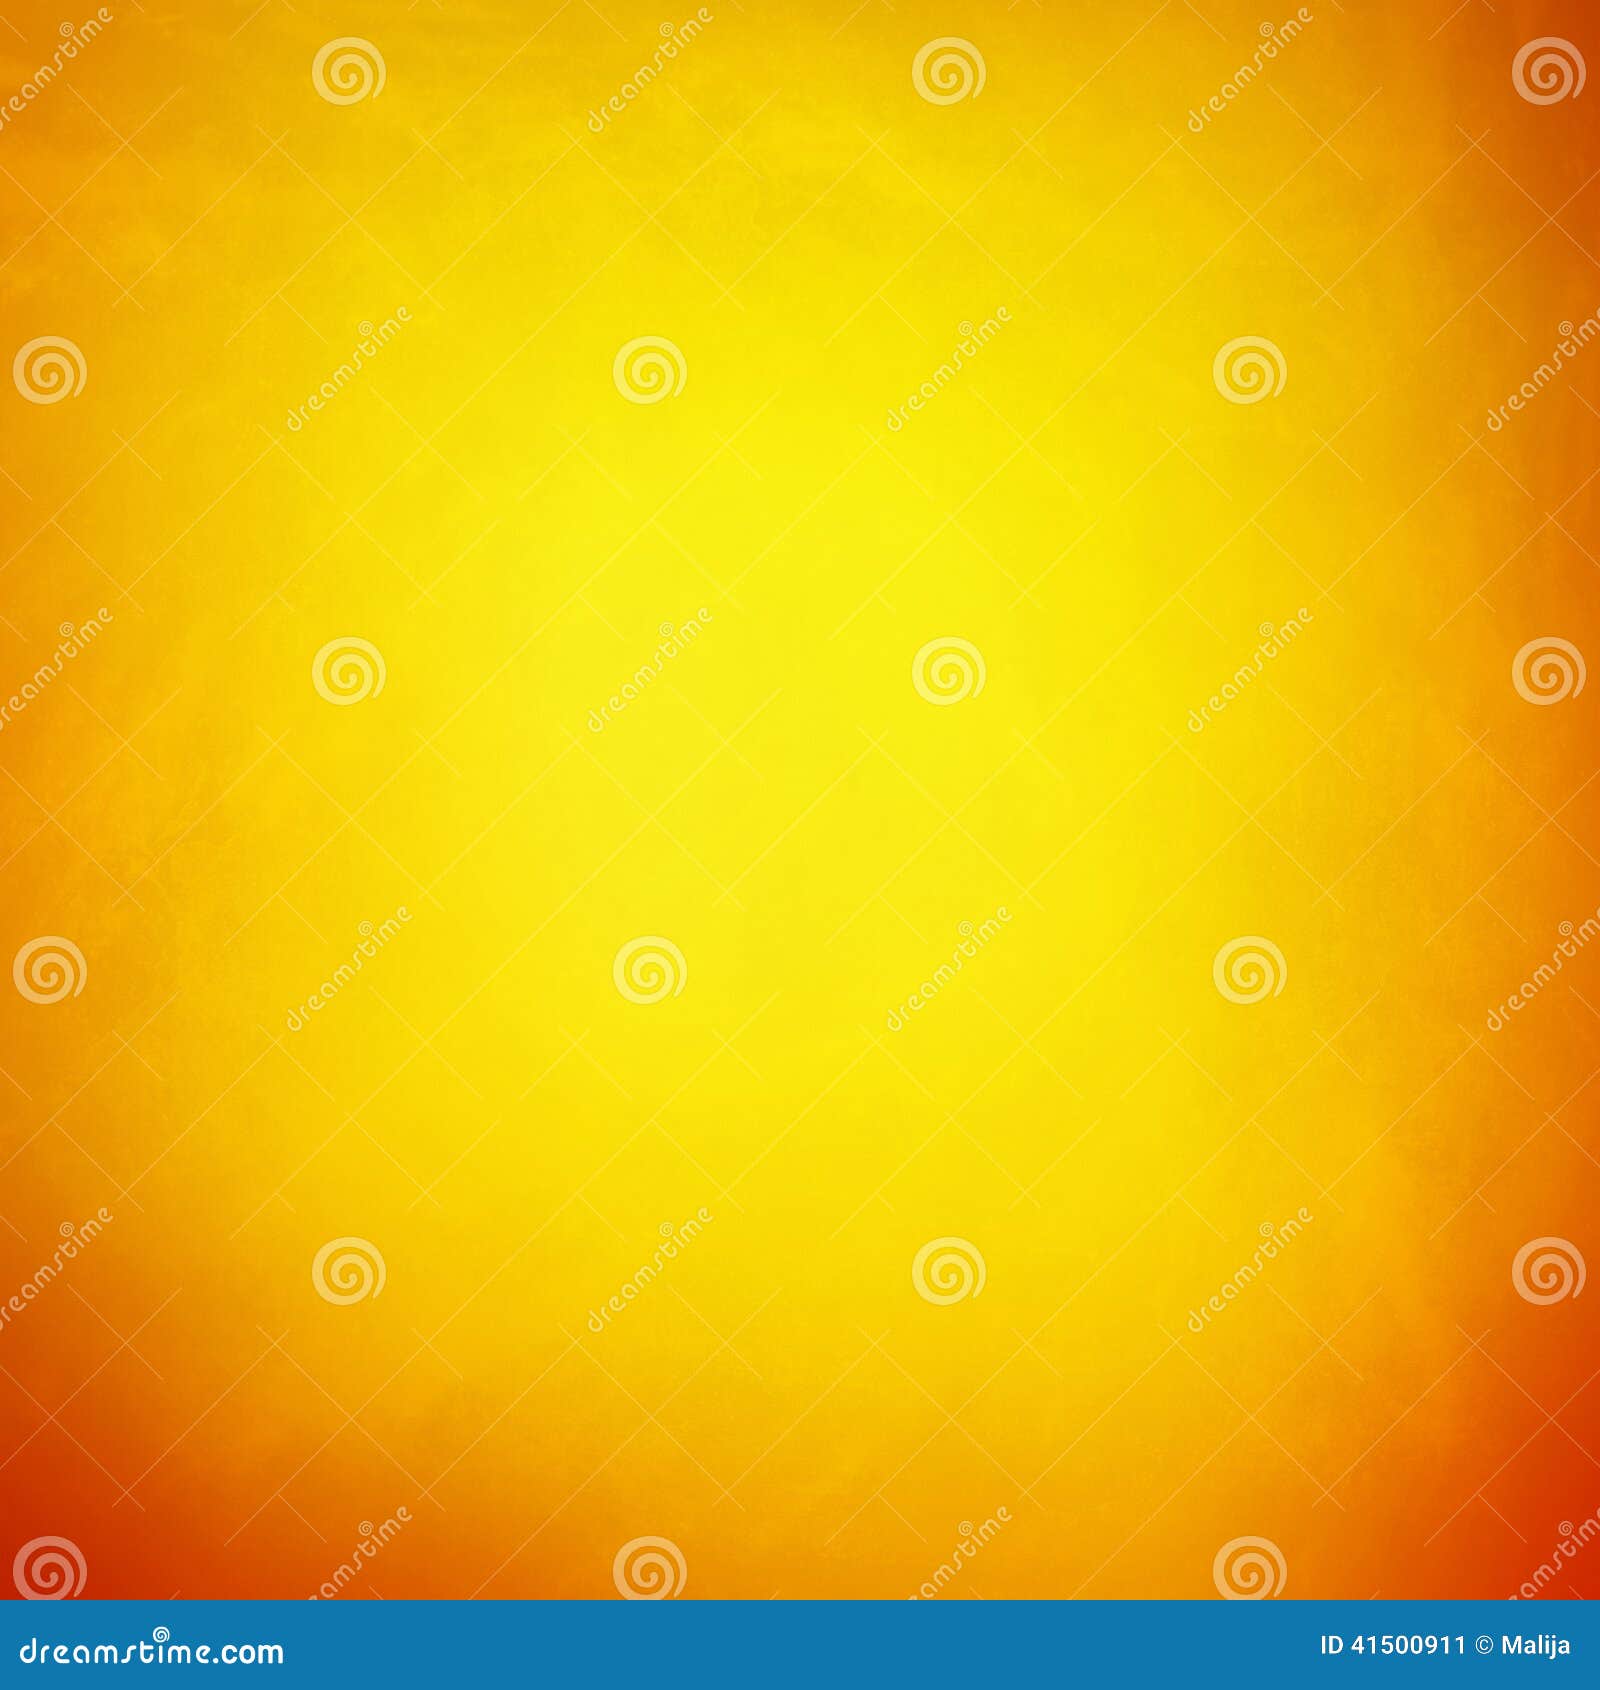 Yellow And Orange Texture Background Stock Photo 41500911 - Megapixl